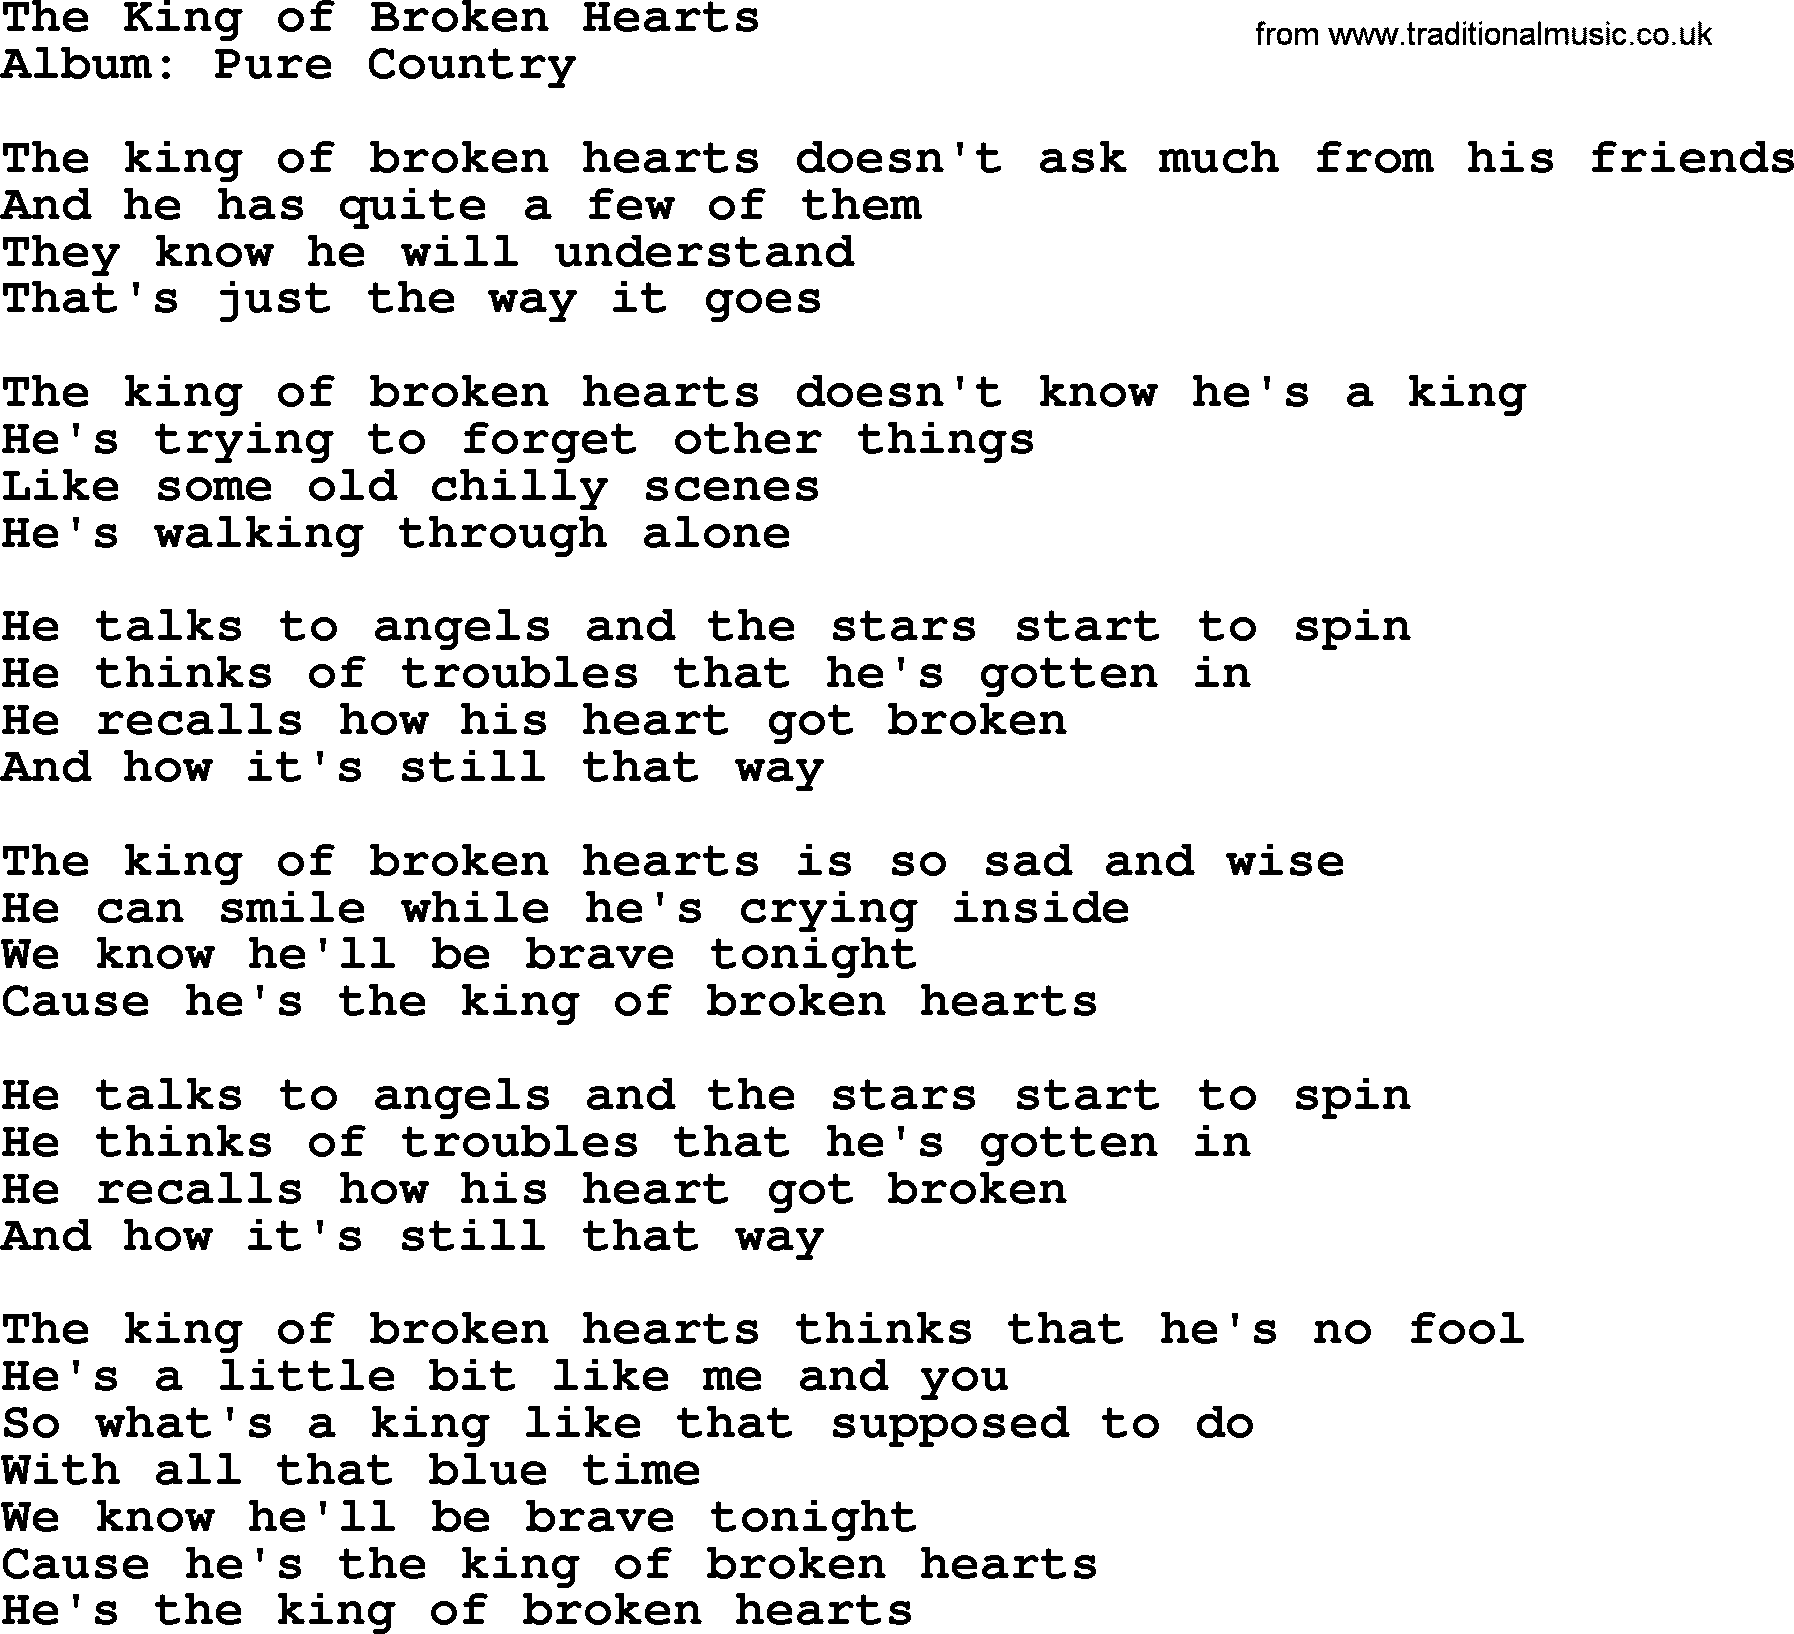 George Strait song: The King of Broken Hearts, lyrics